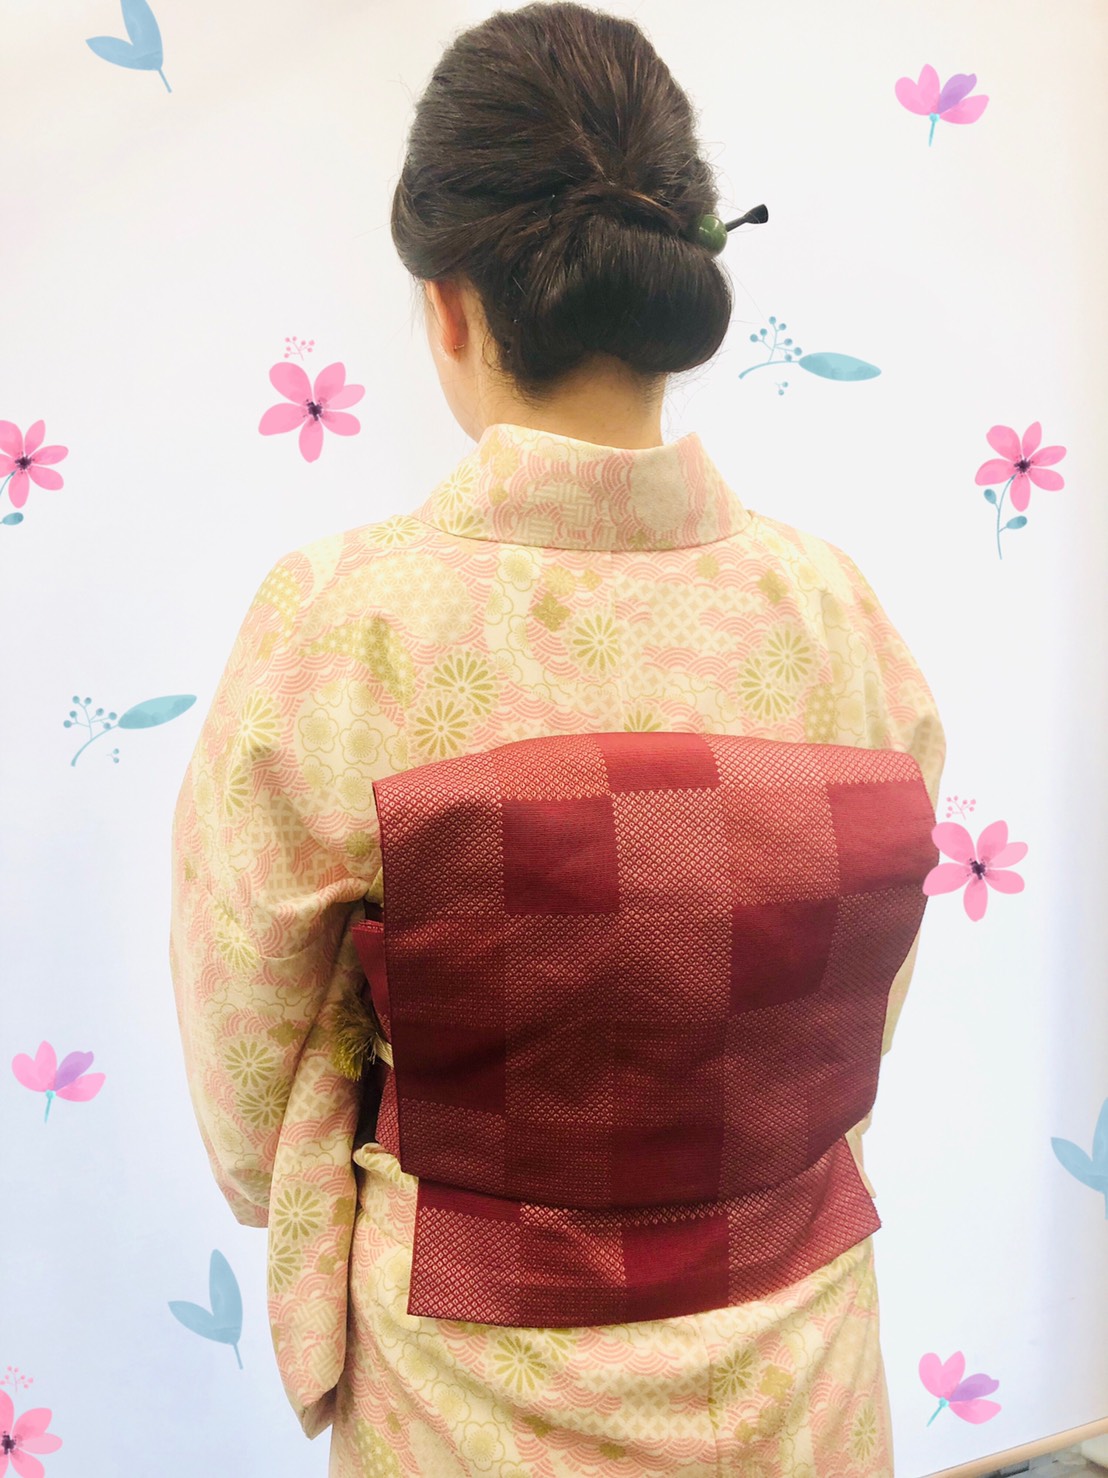 Shop Topics 着物でオペラ 着物レンタルvasara渋谷店 渋谷で着物 浴衣を楽しむなら 着物レンタルvasara